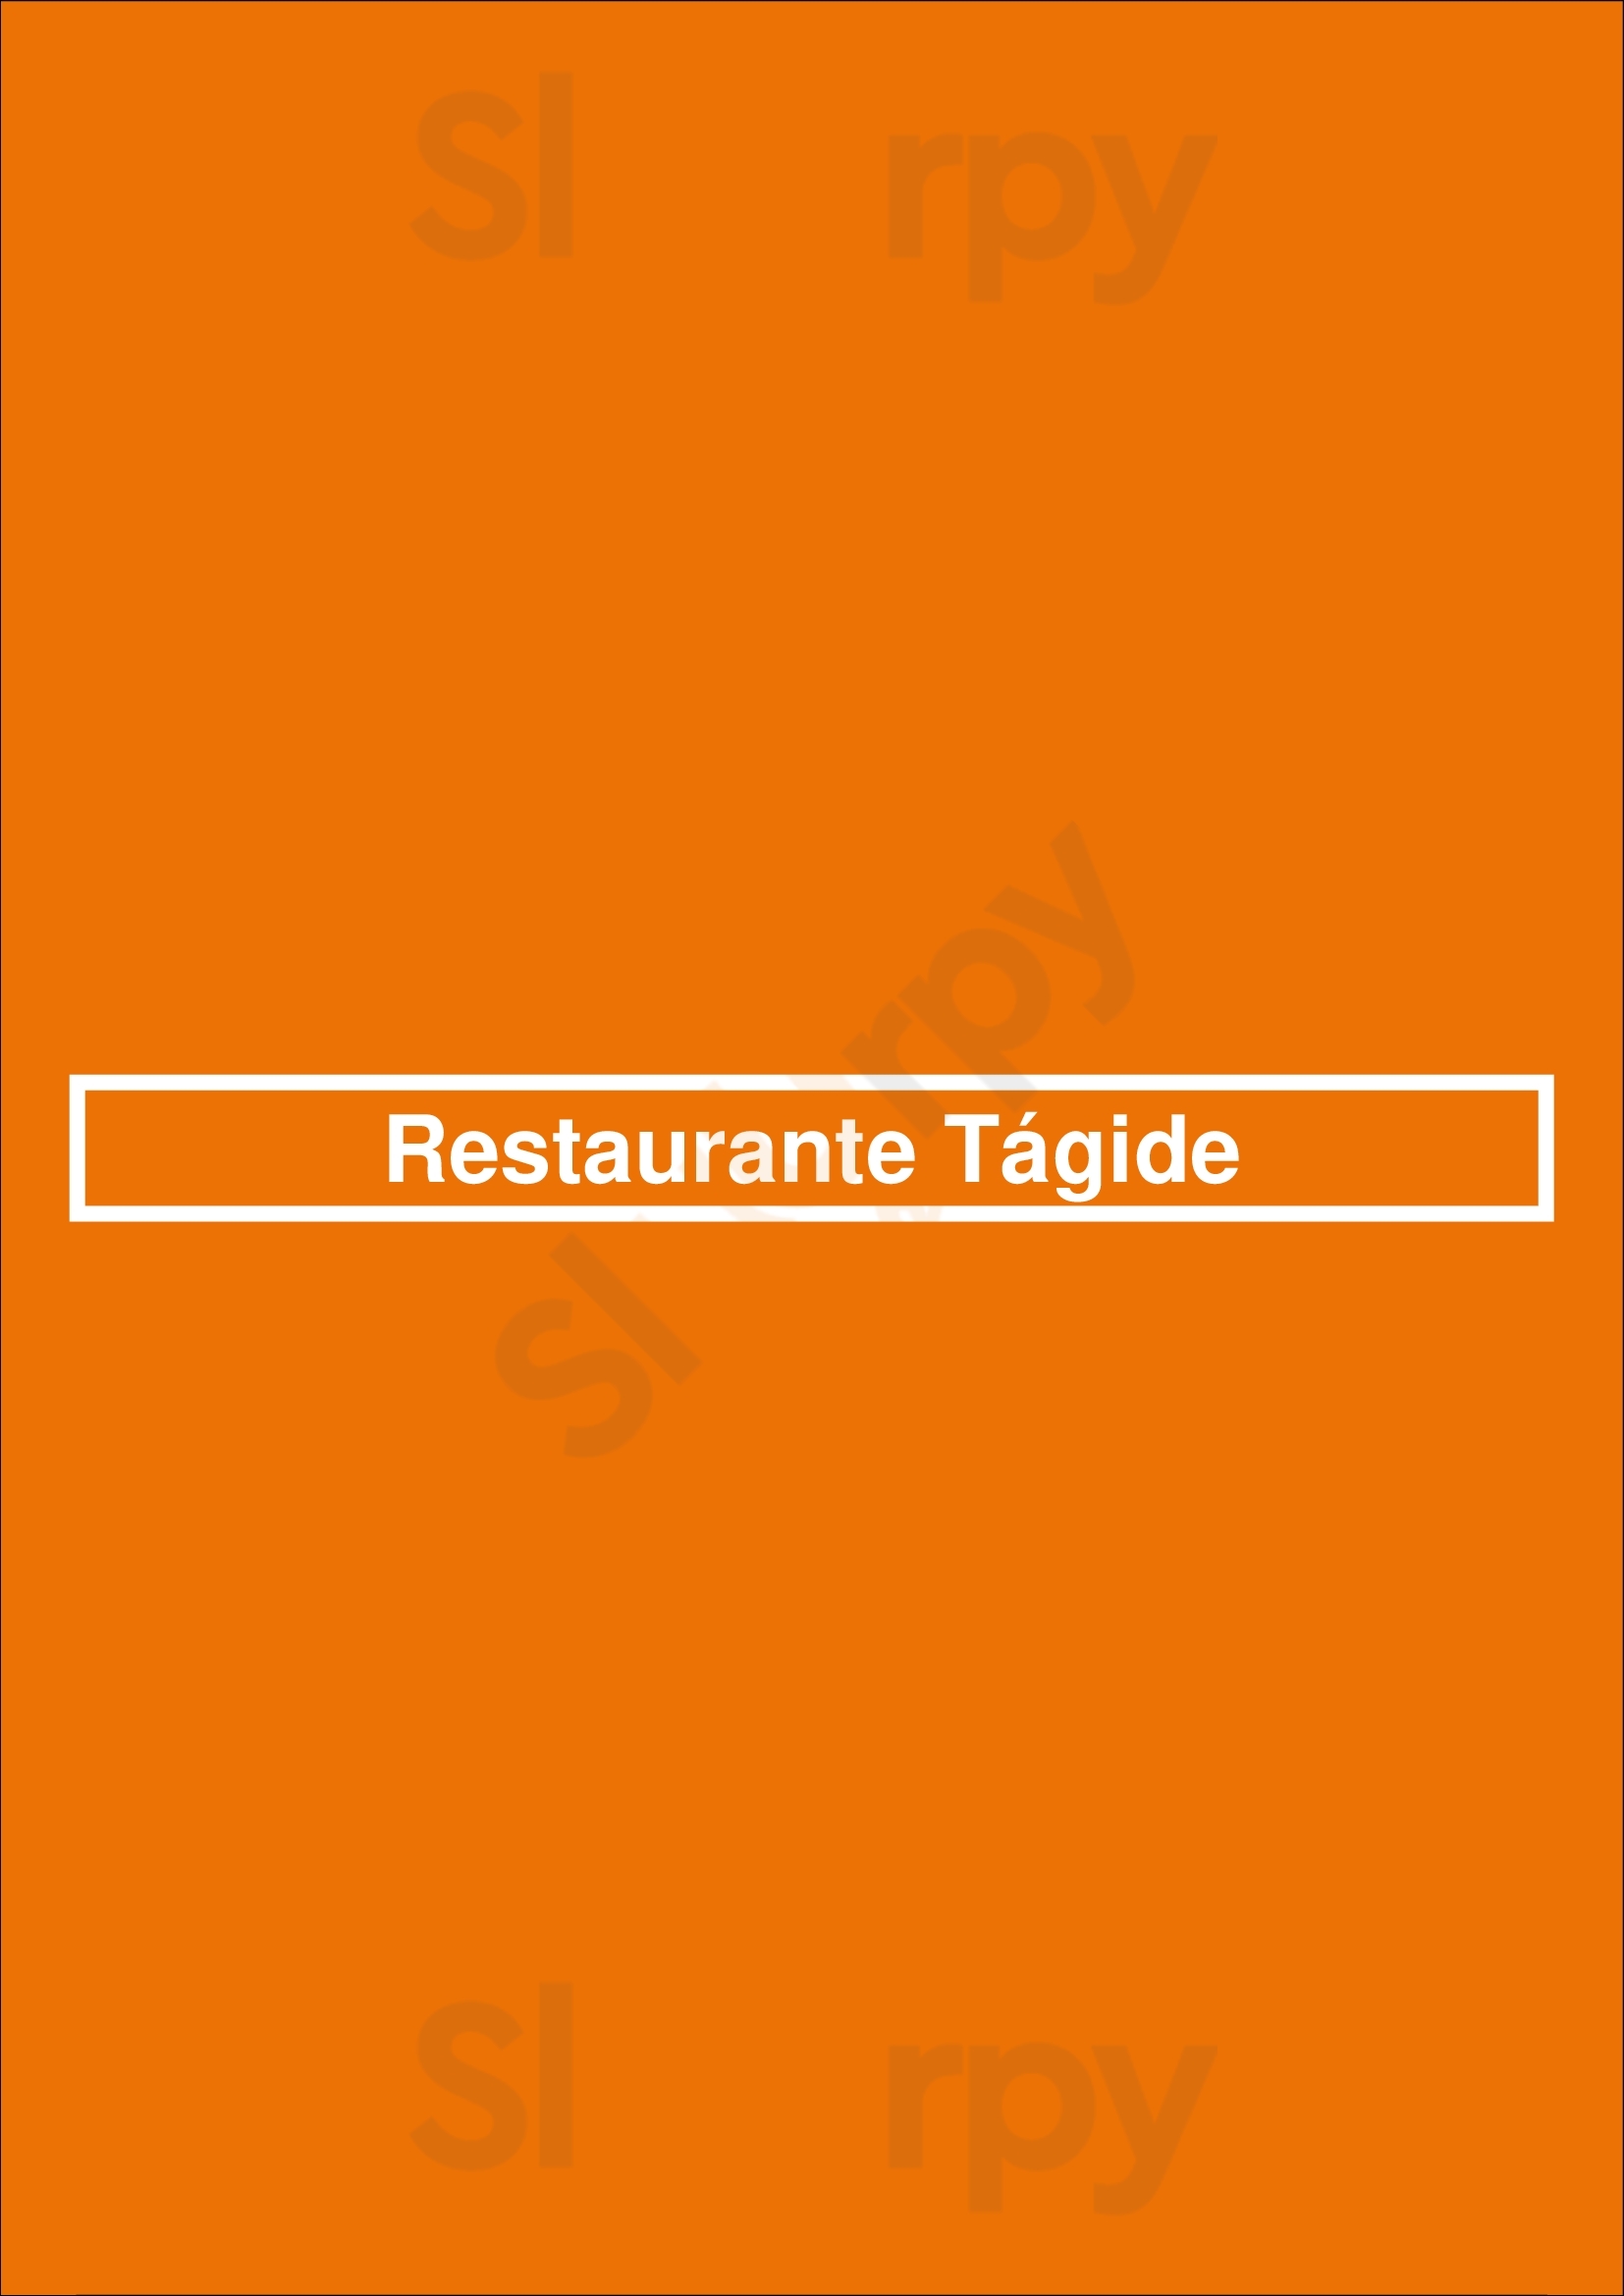 Restaurante Tágide Lisboa Menu - 1